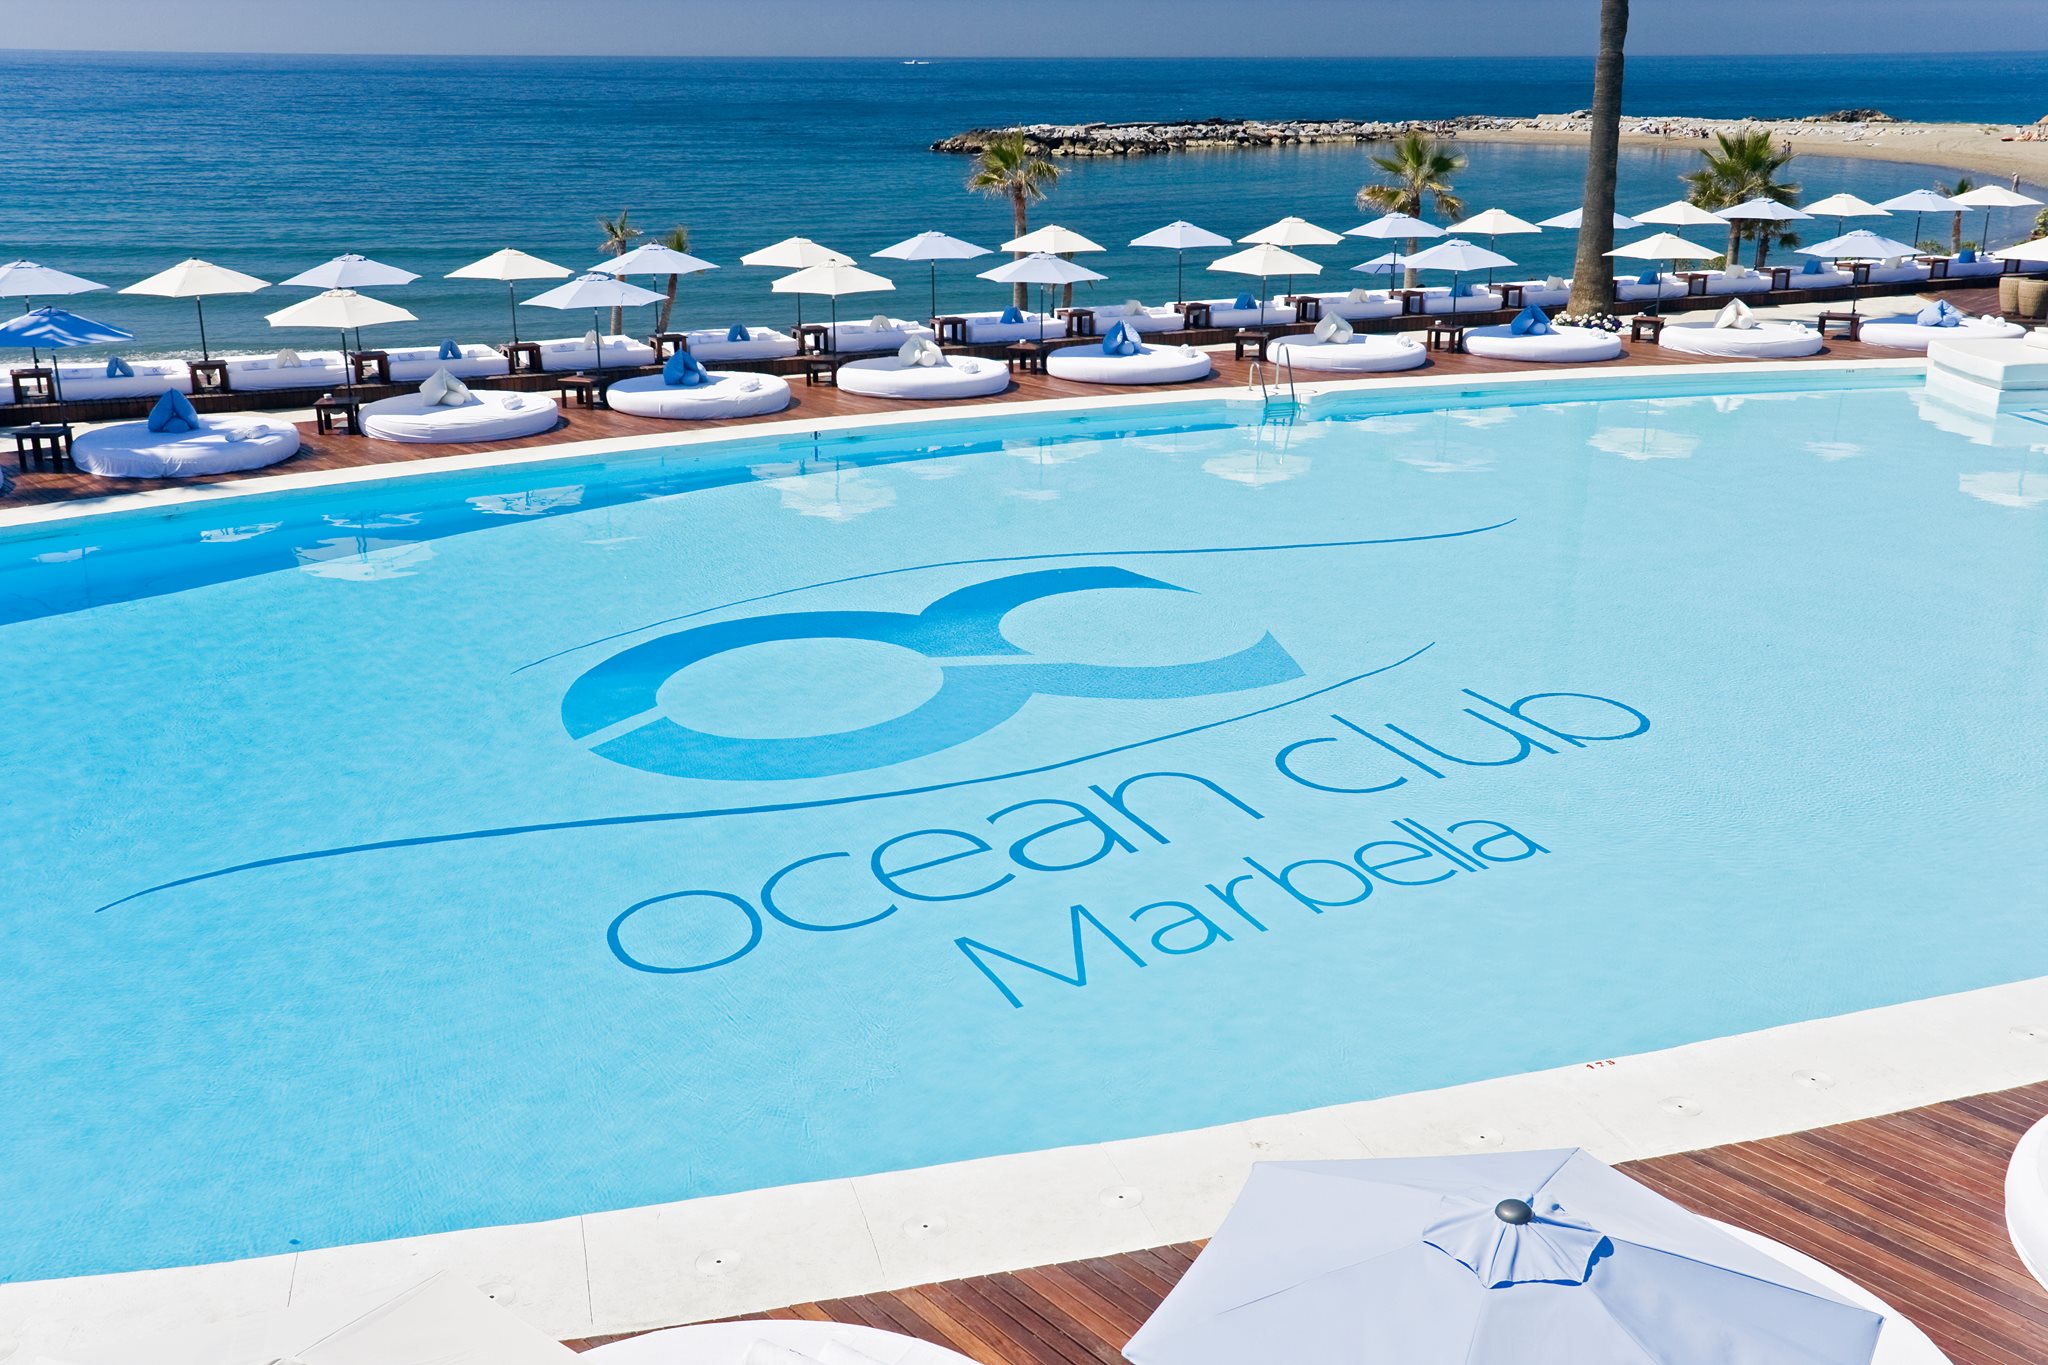 Ocean Club Marbella